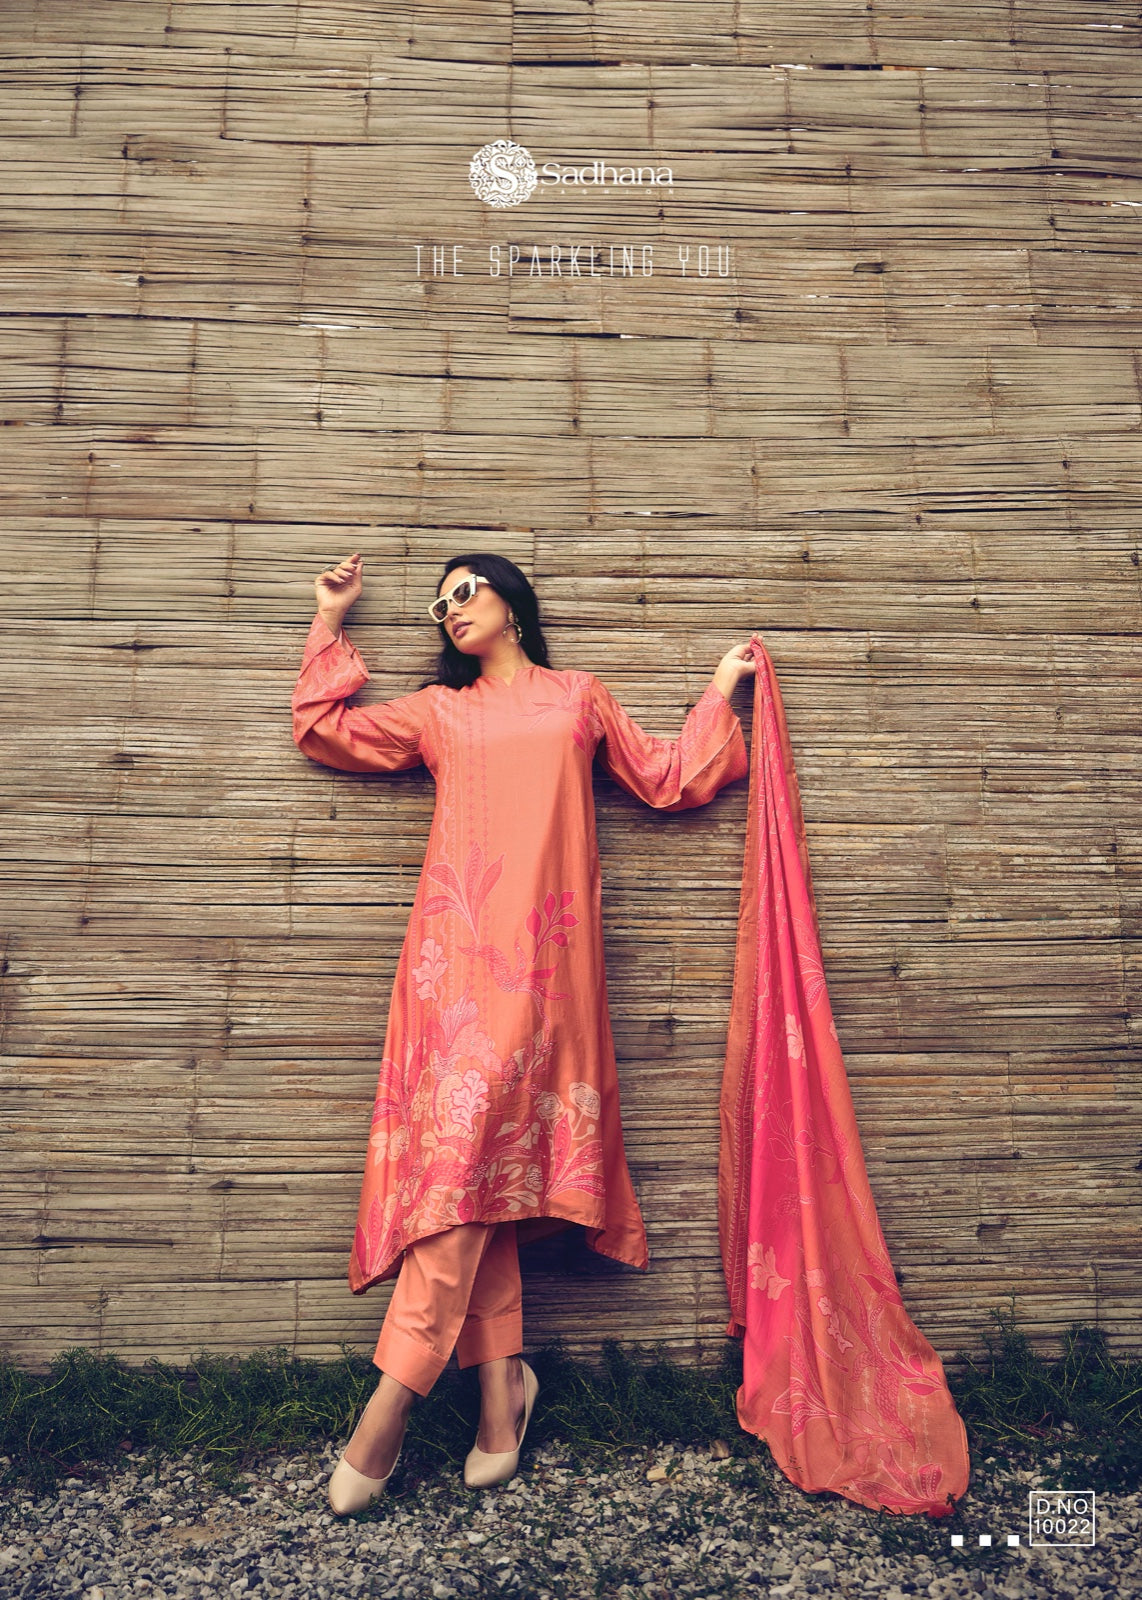 Kavleen Sadhana Muslin Silk Pant Style Suits